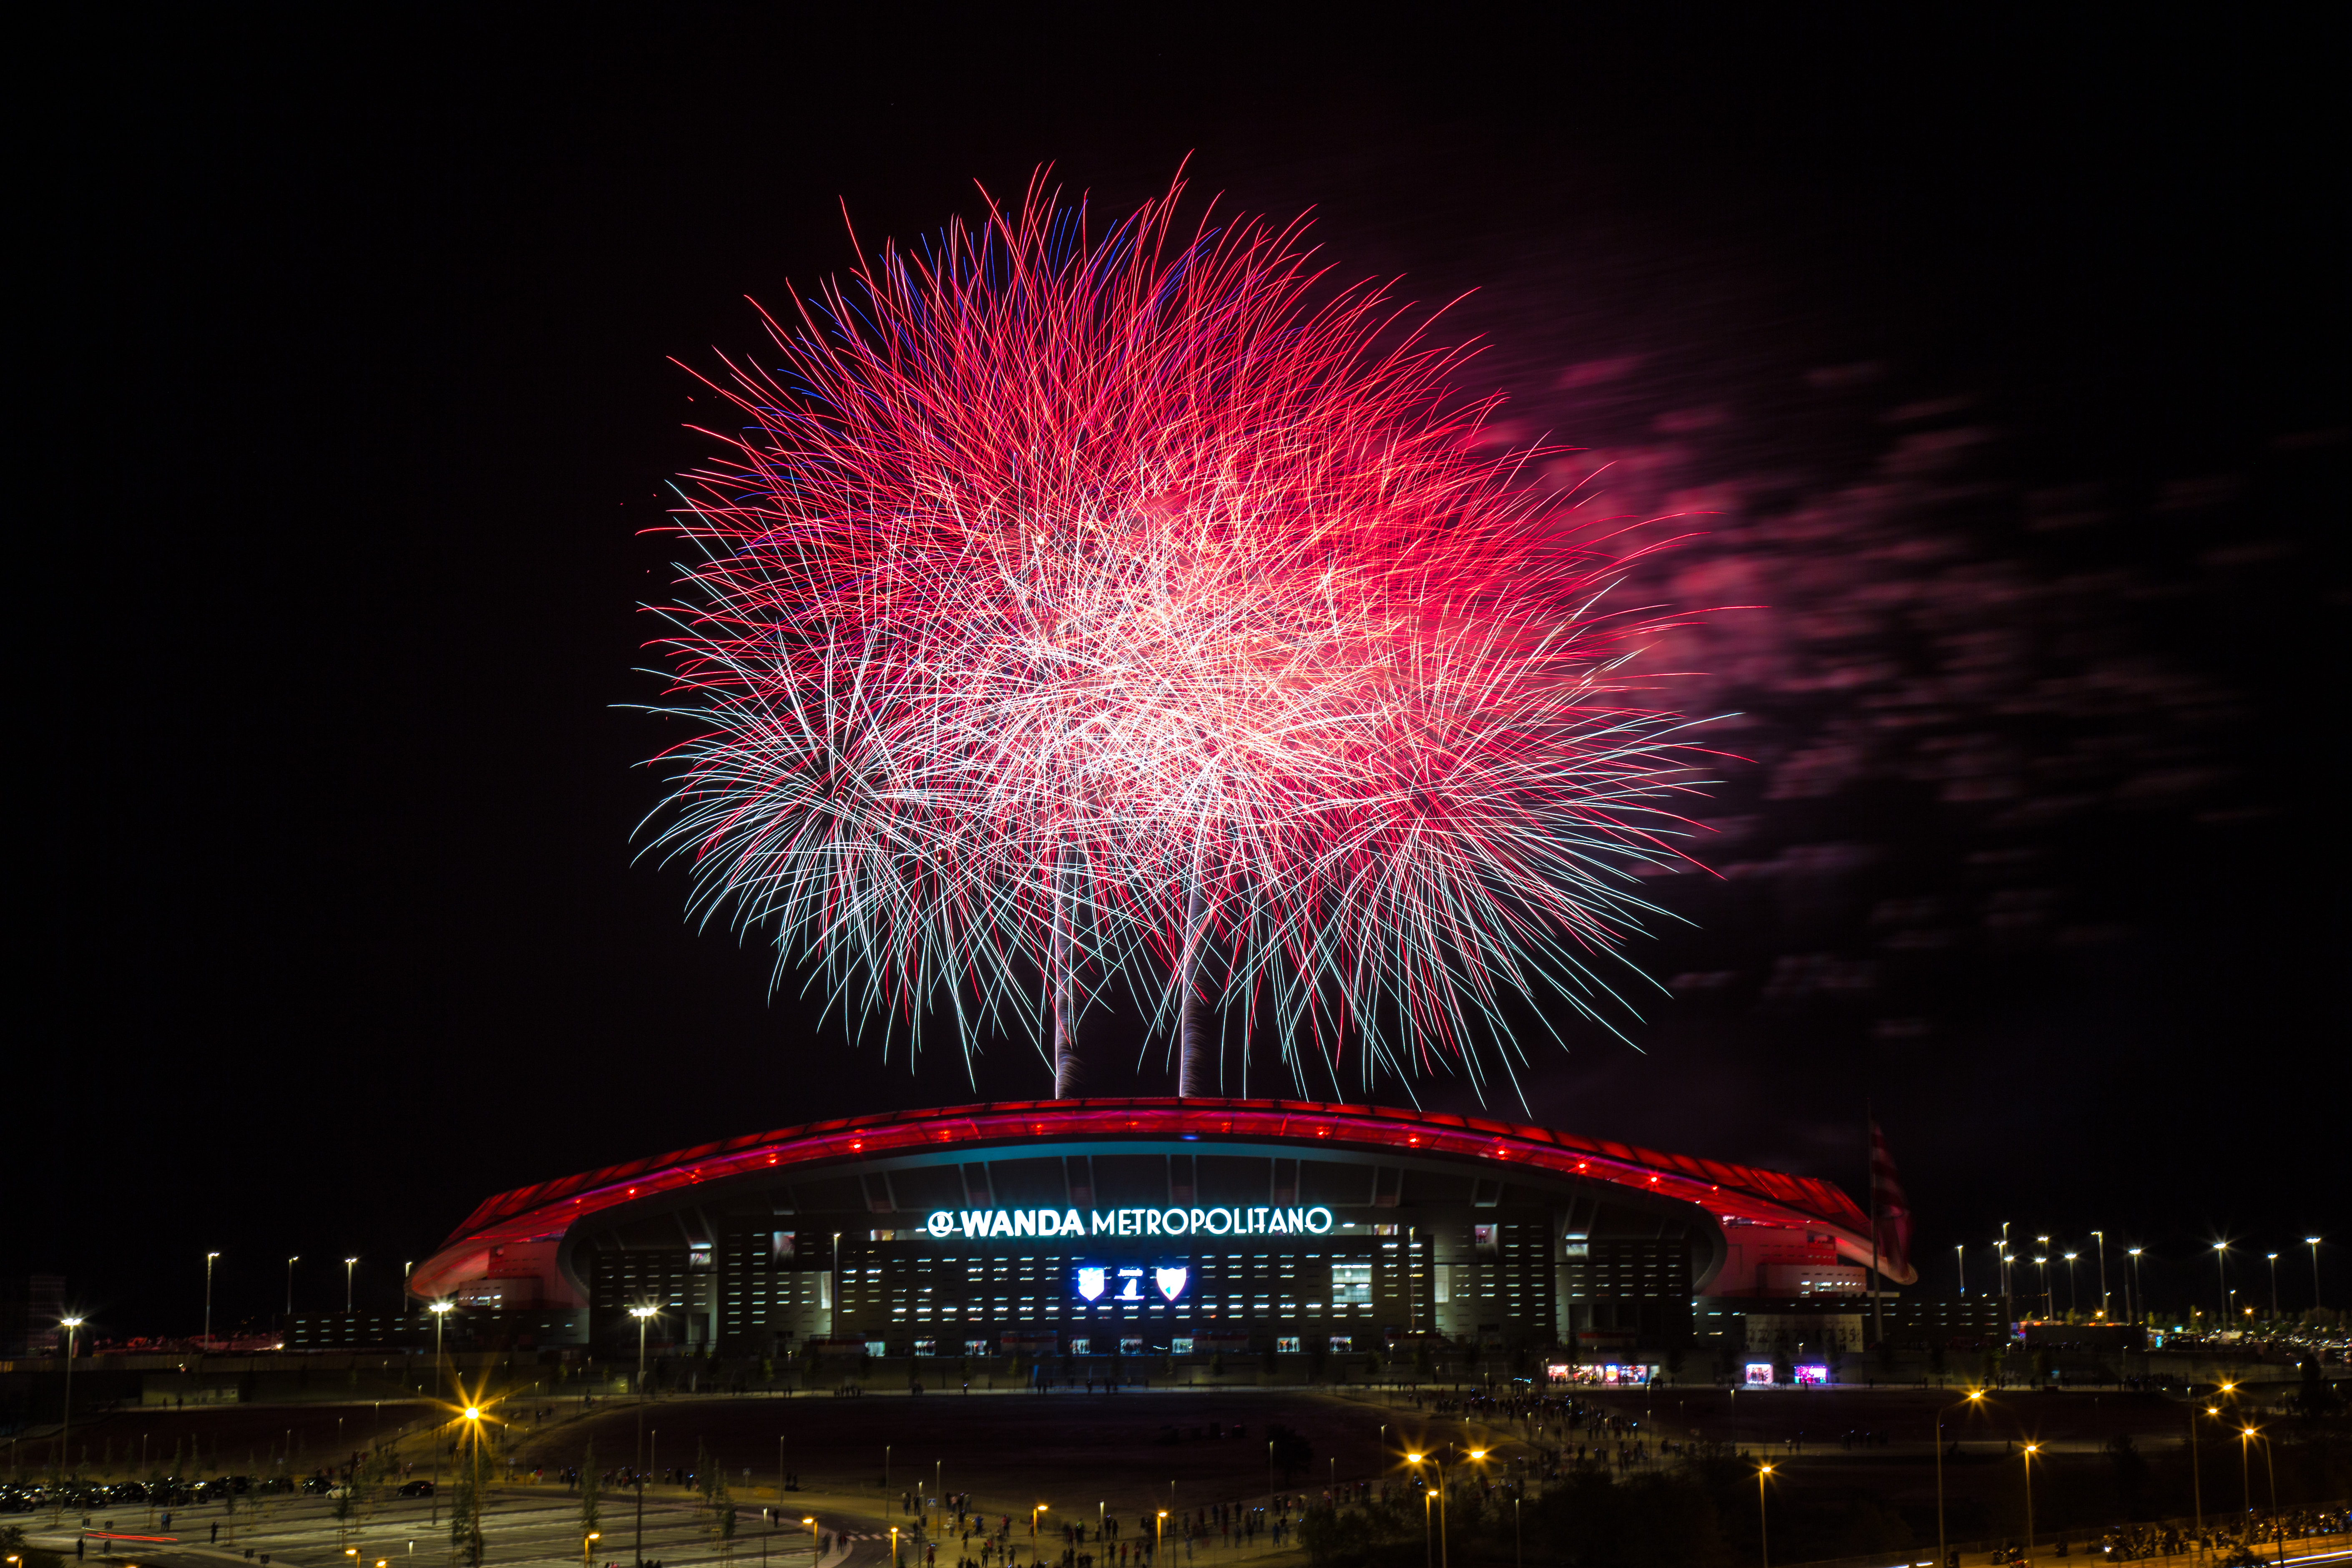 Outside Wanda Metropolitano Stadium- Fireworks